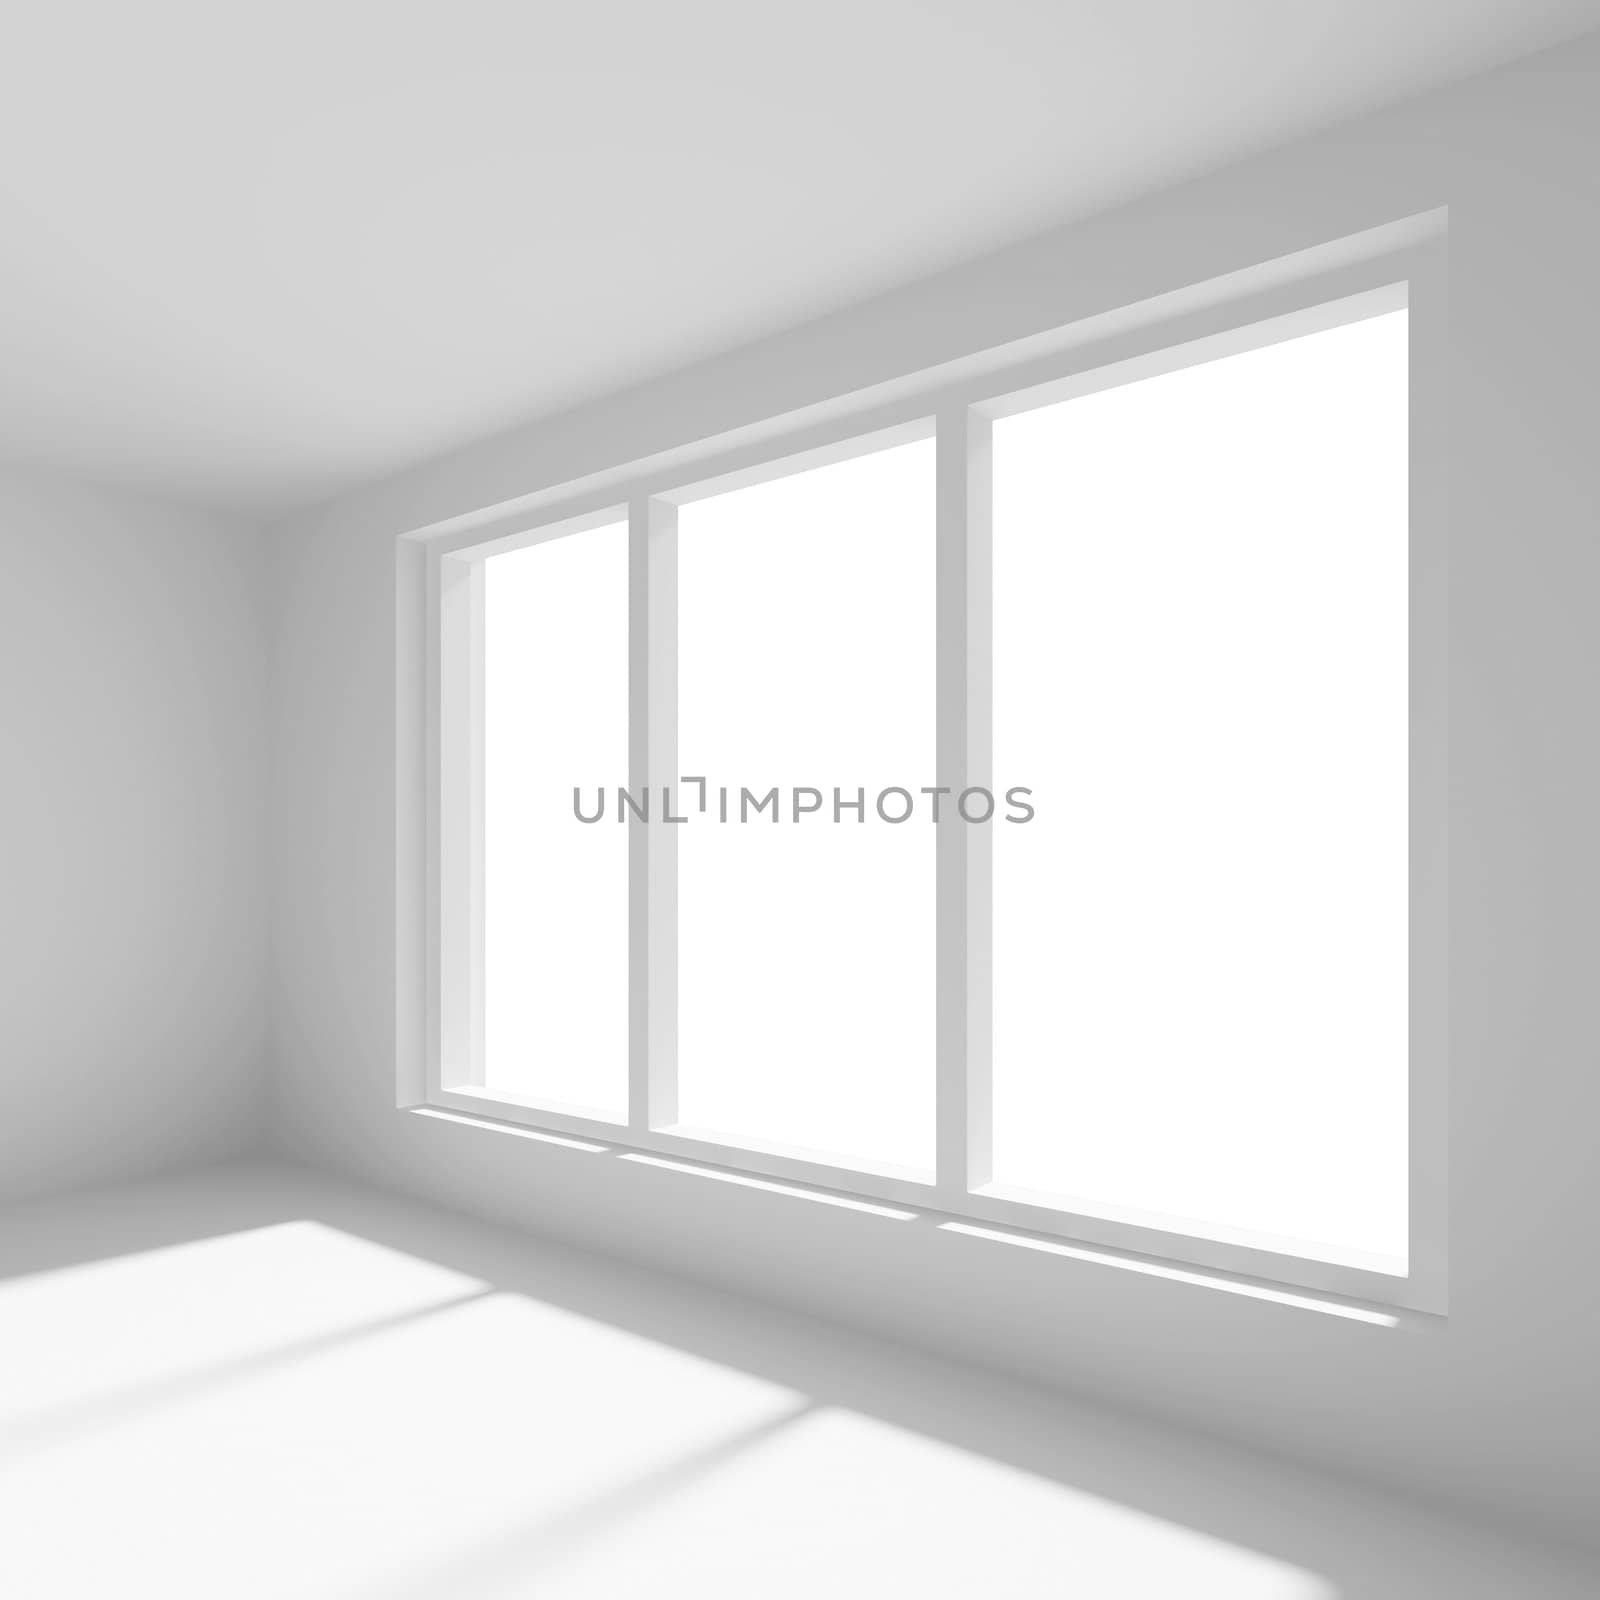 3d Illustration of White Empty Room